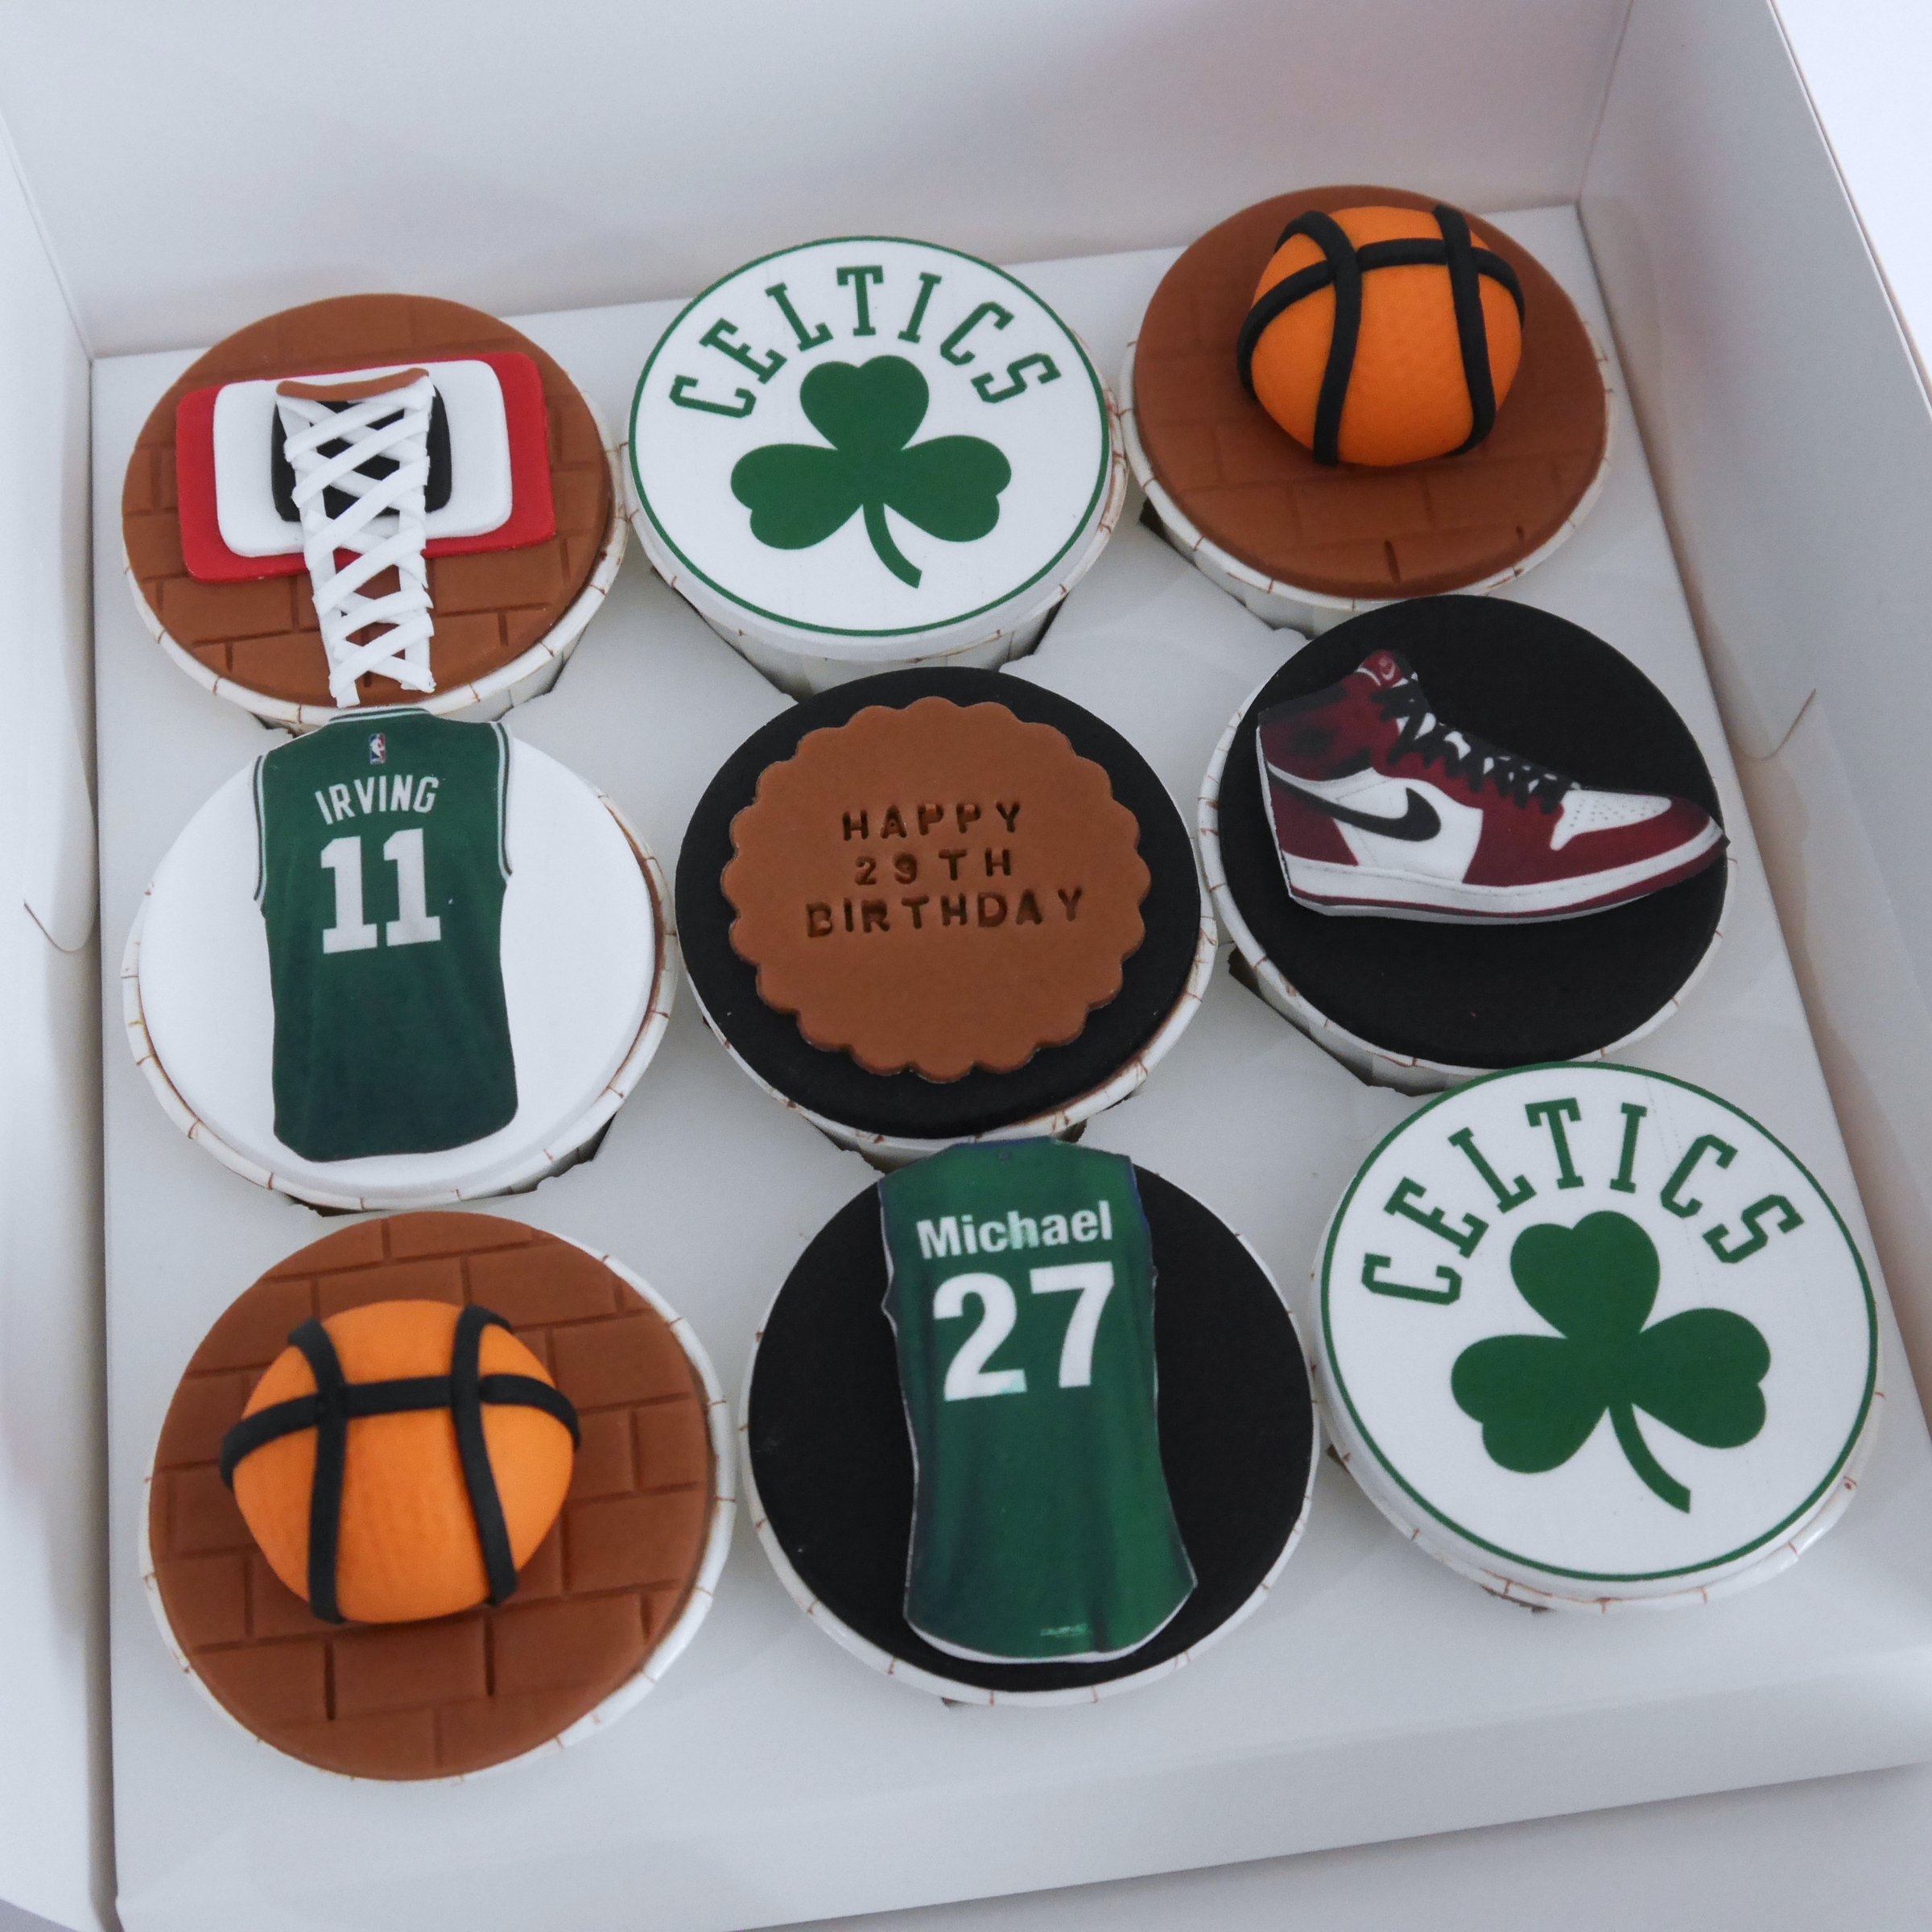 Tootie cupcakes - Basketball themed cake | Facebook